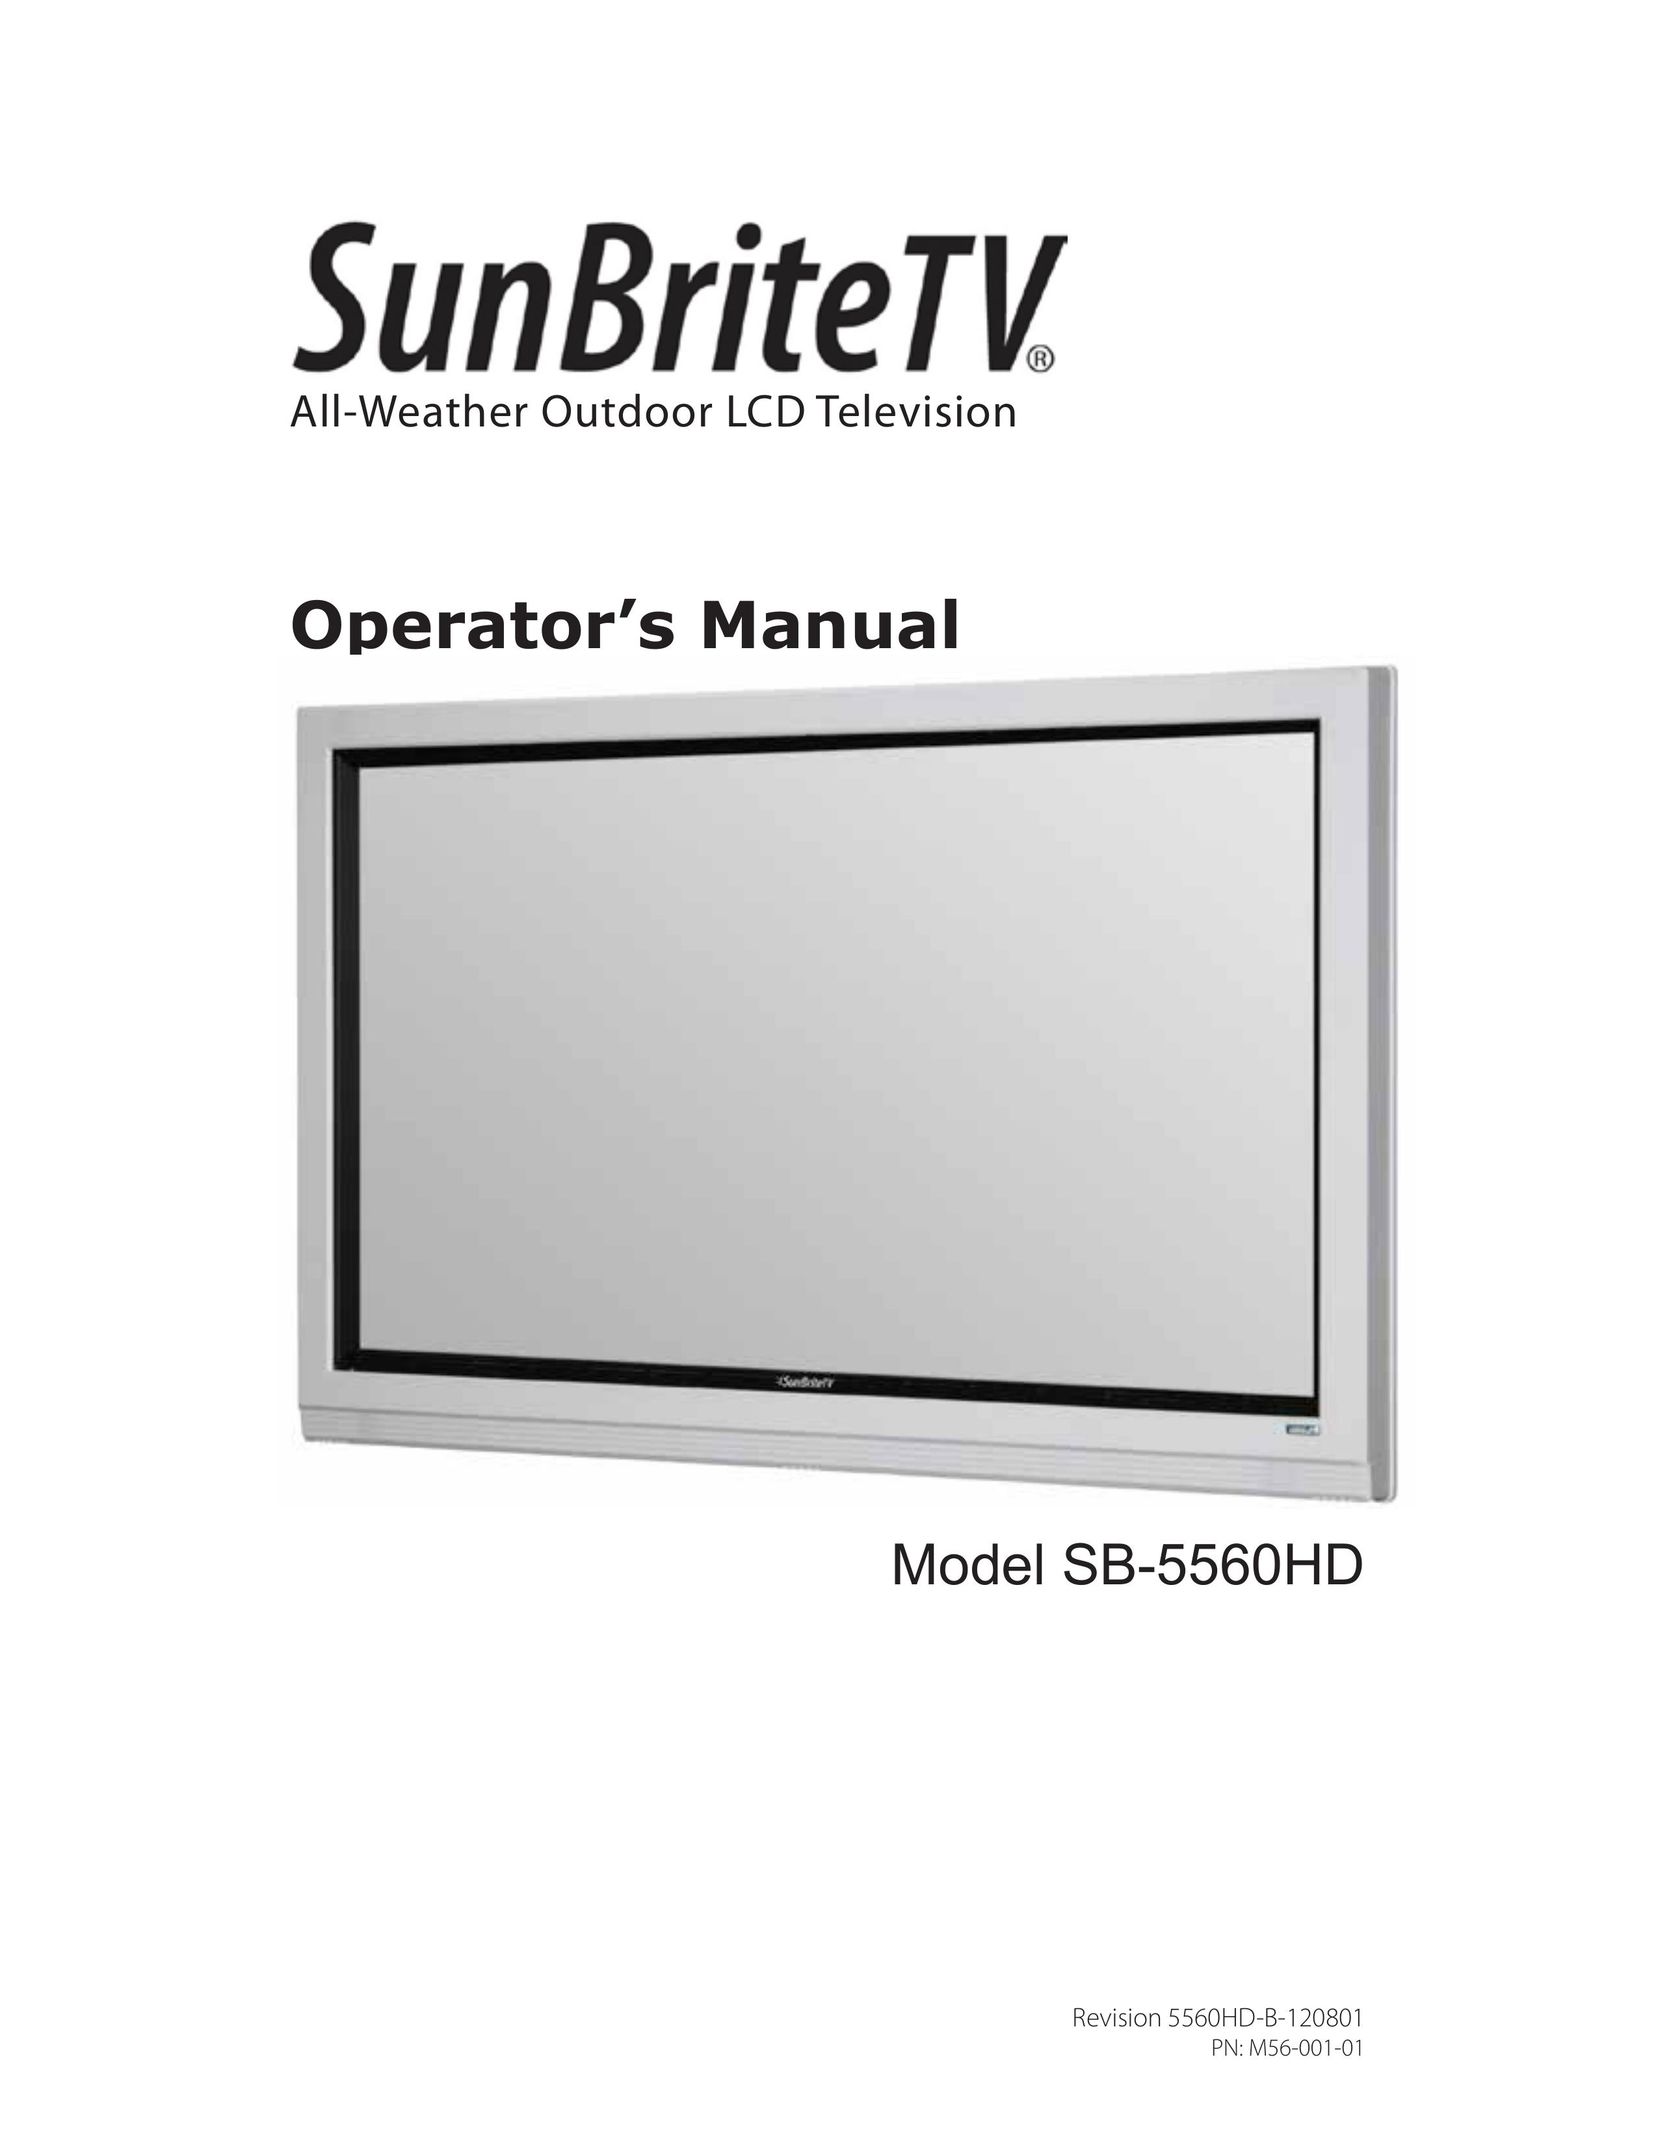 SunBriteTV 5560HD Flat Panel Television User Manual